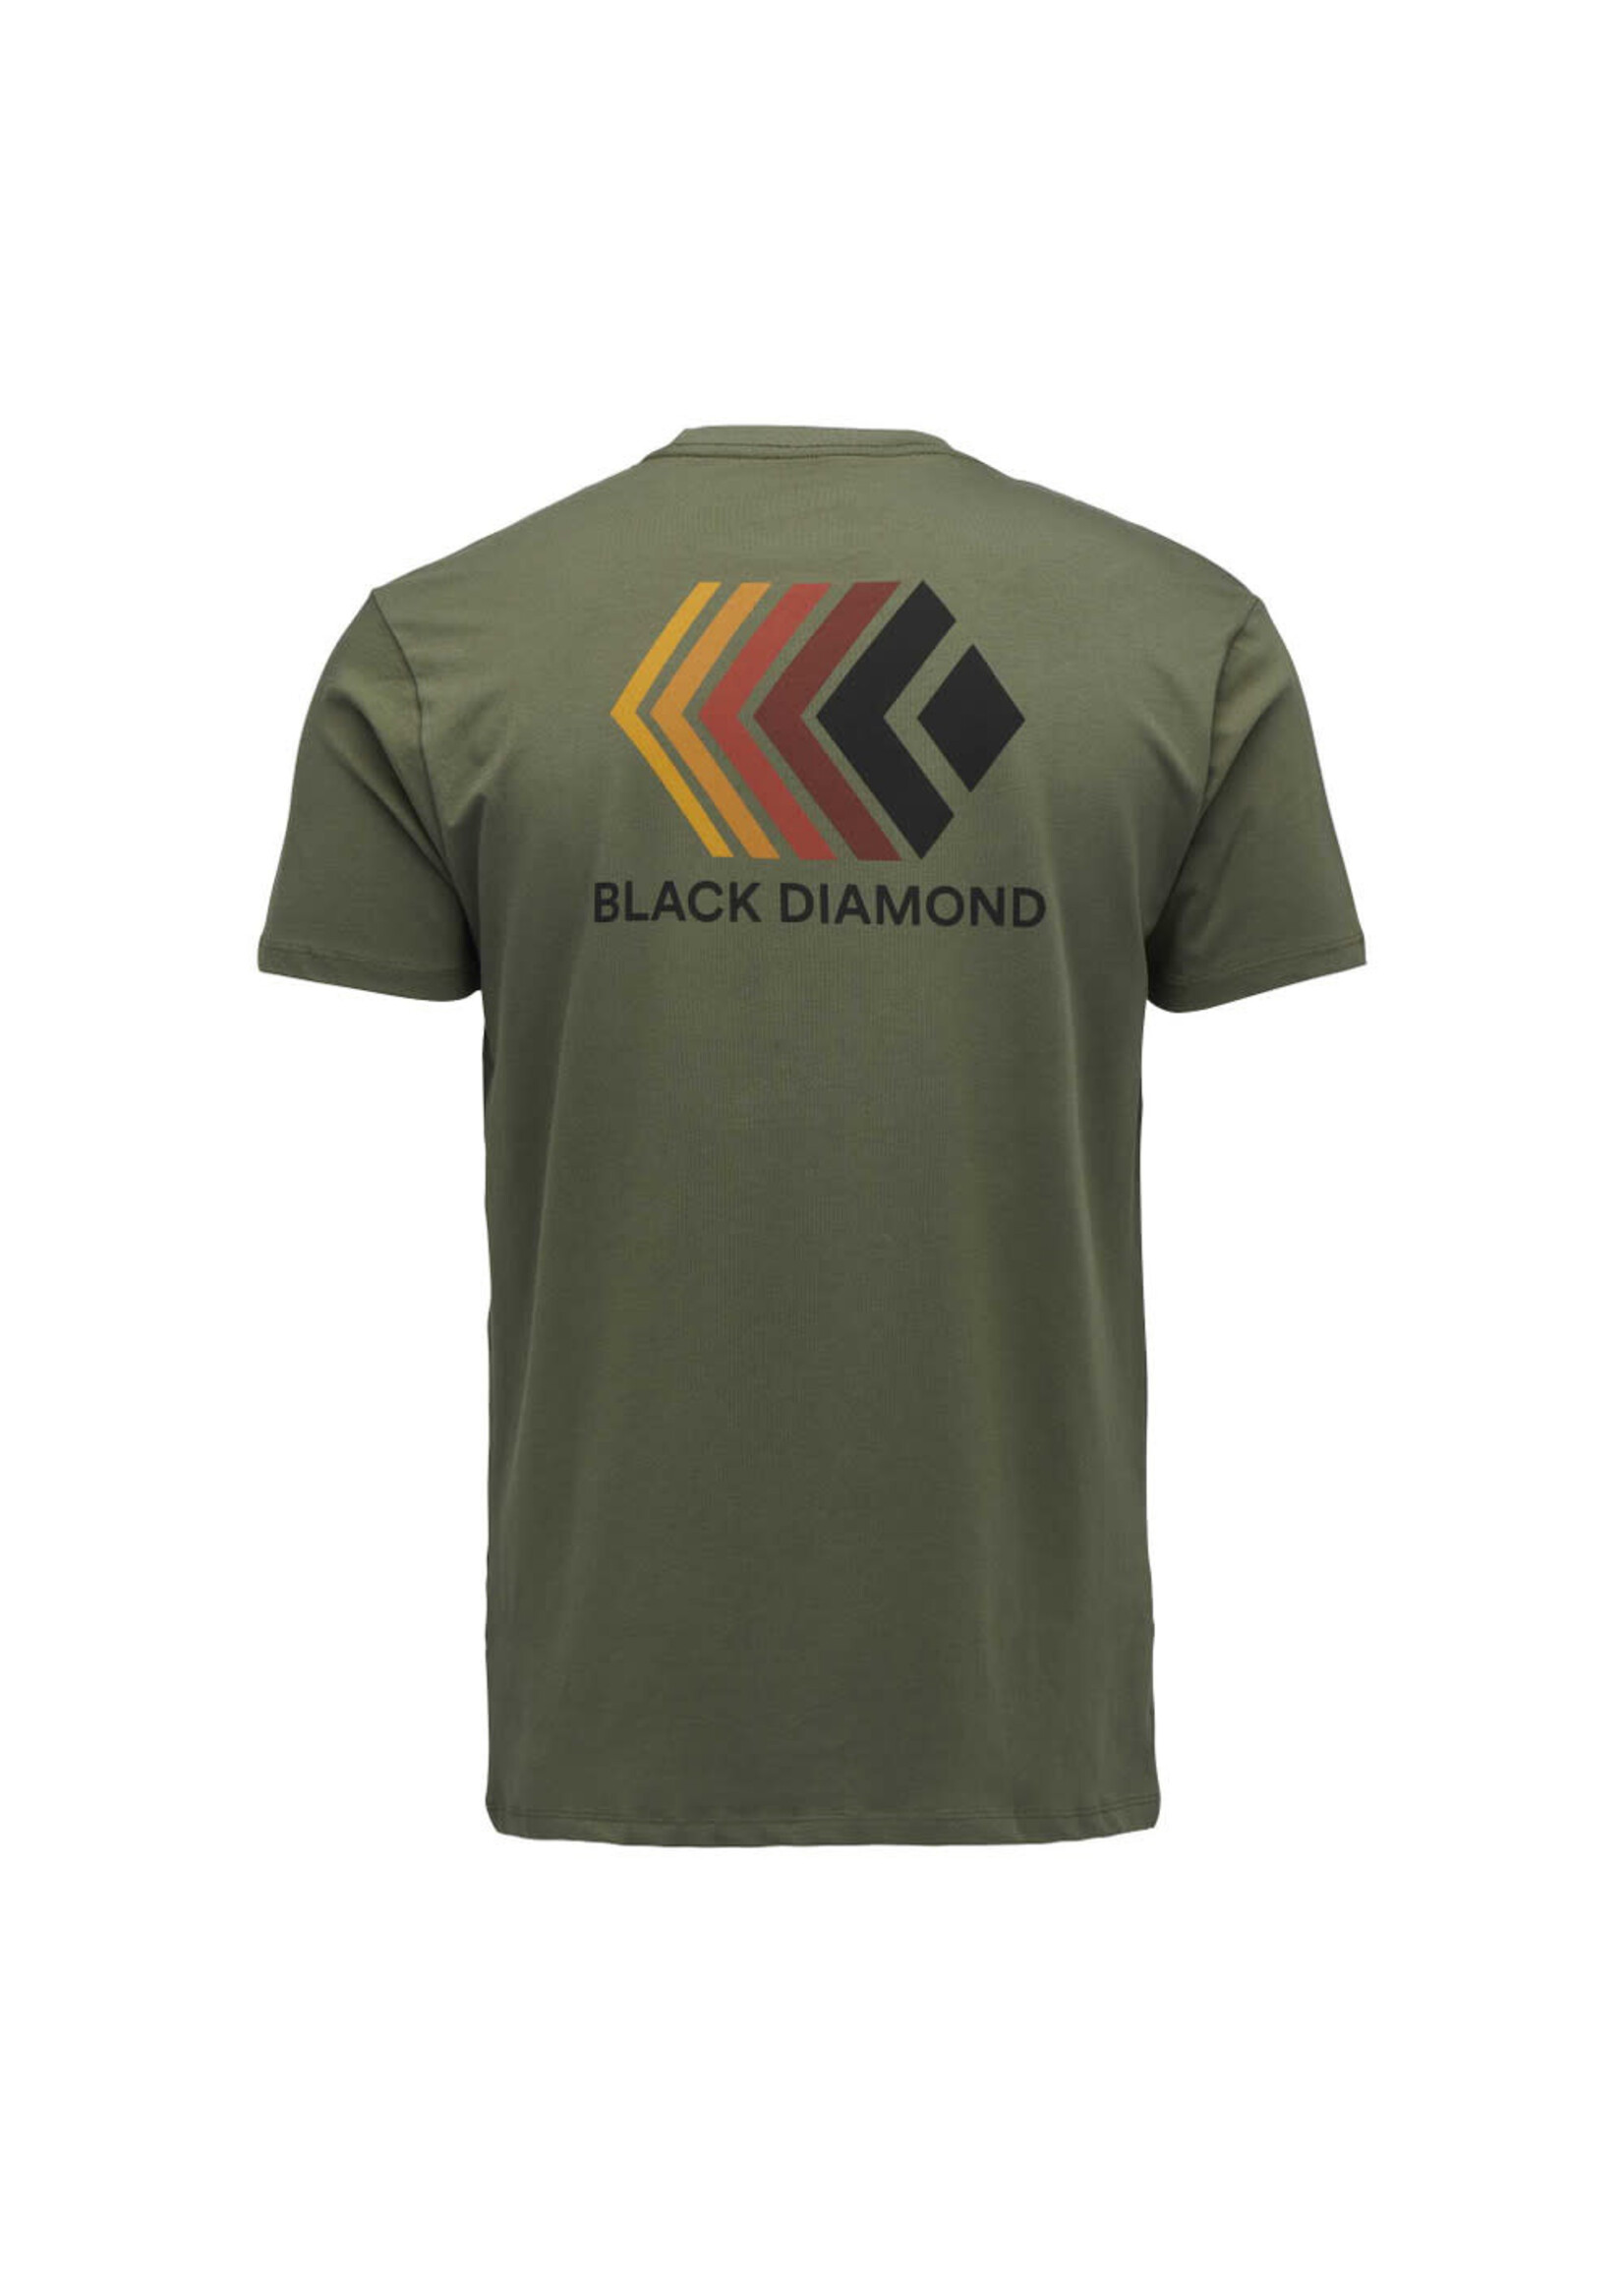 Black Diamond T-shirt Black Diamond Faded Tee